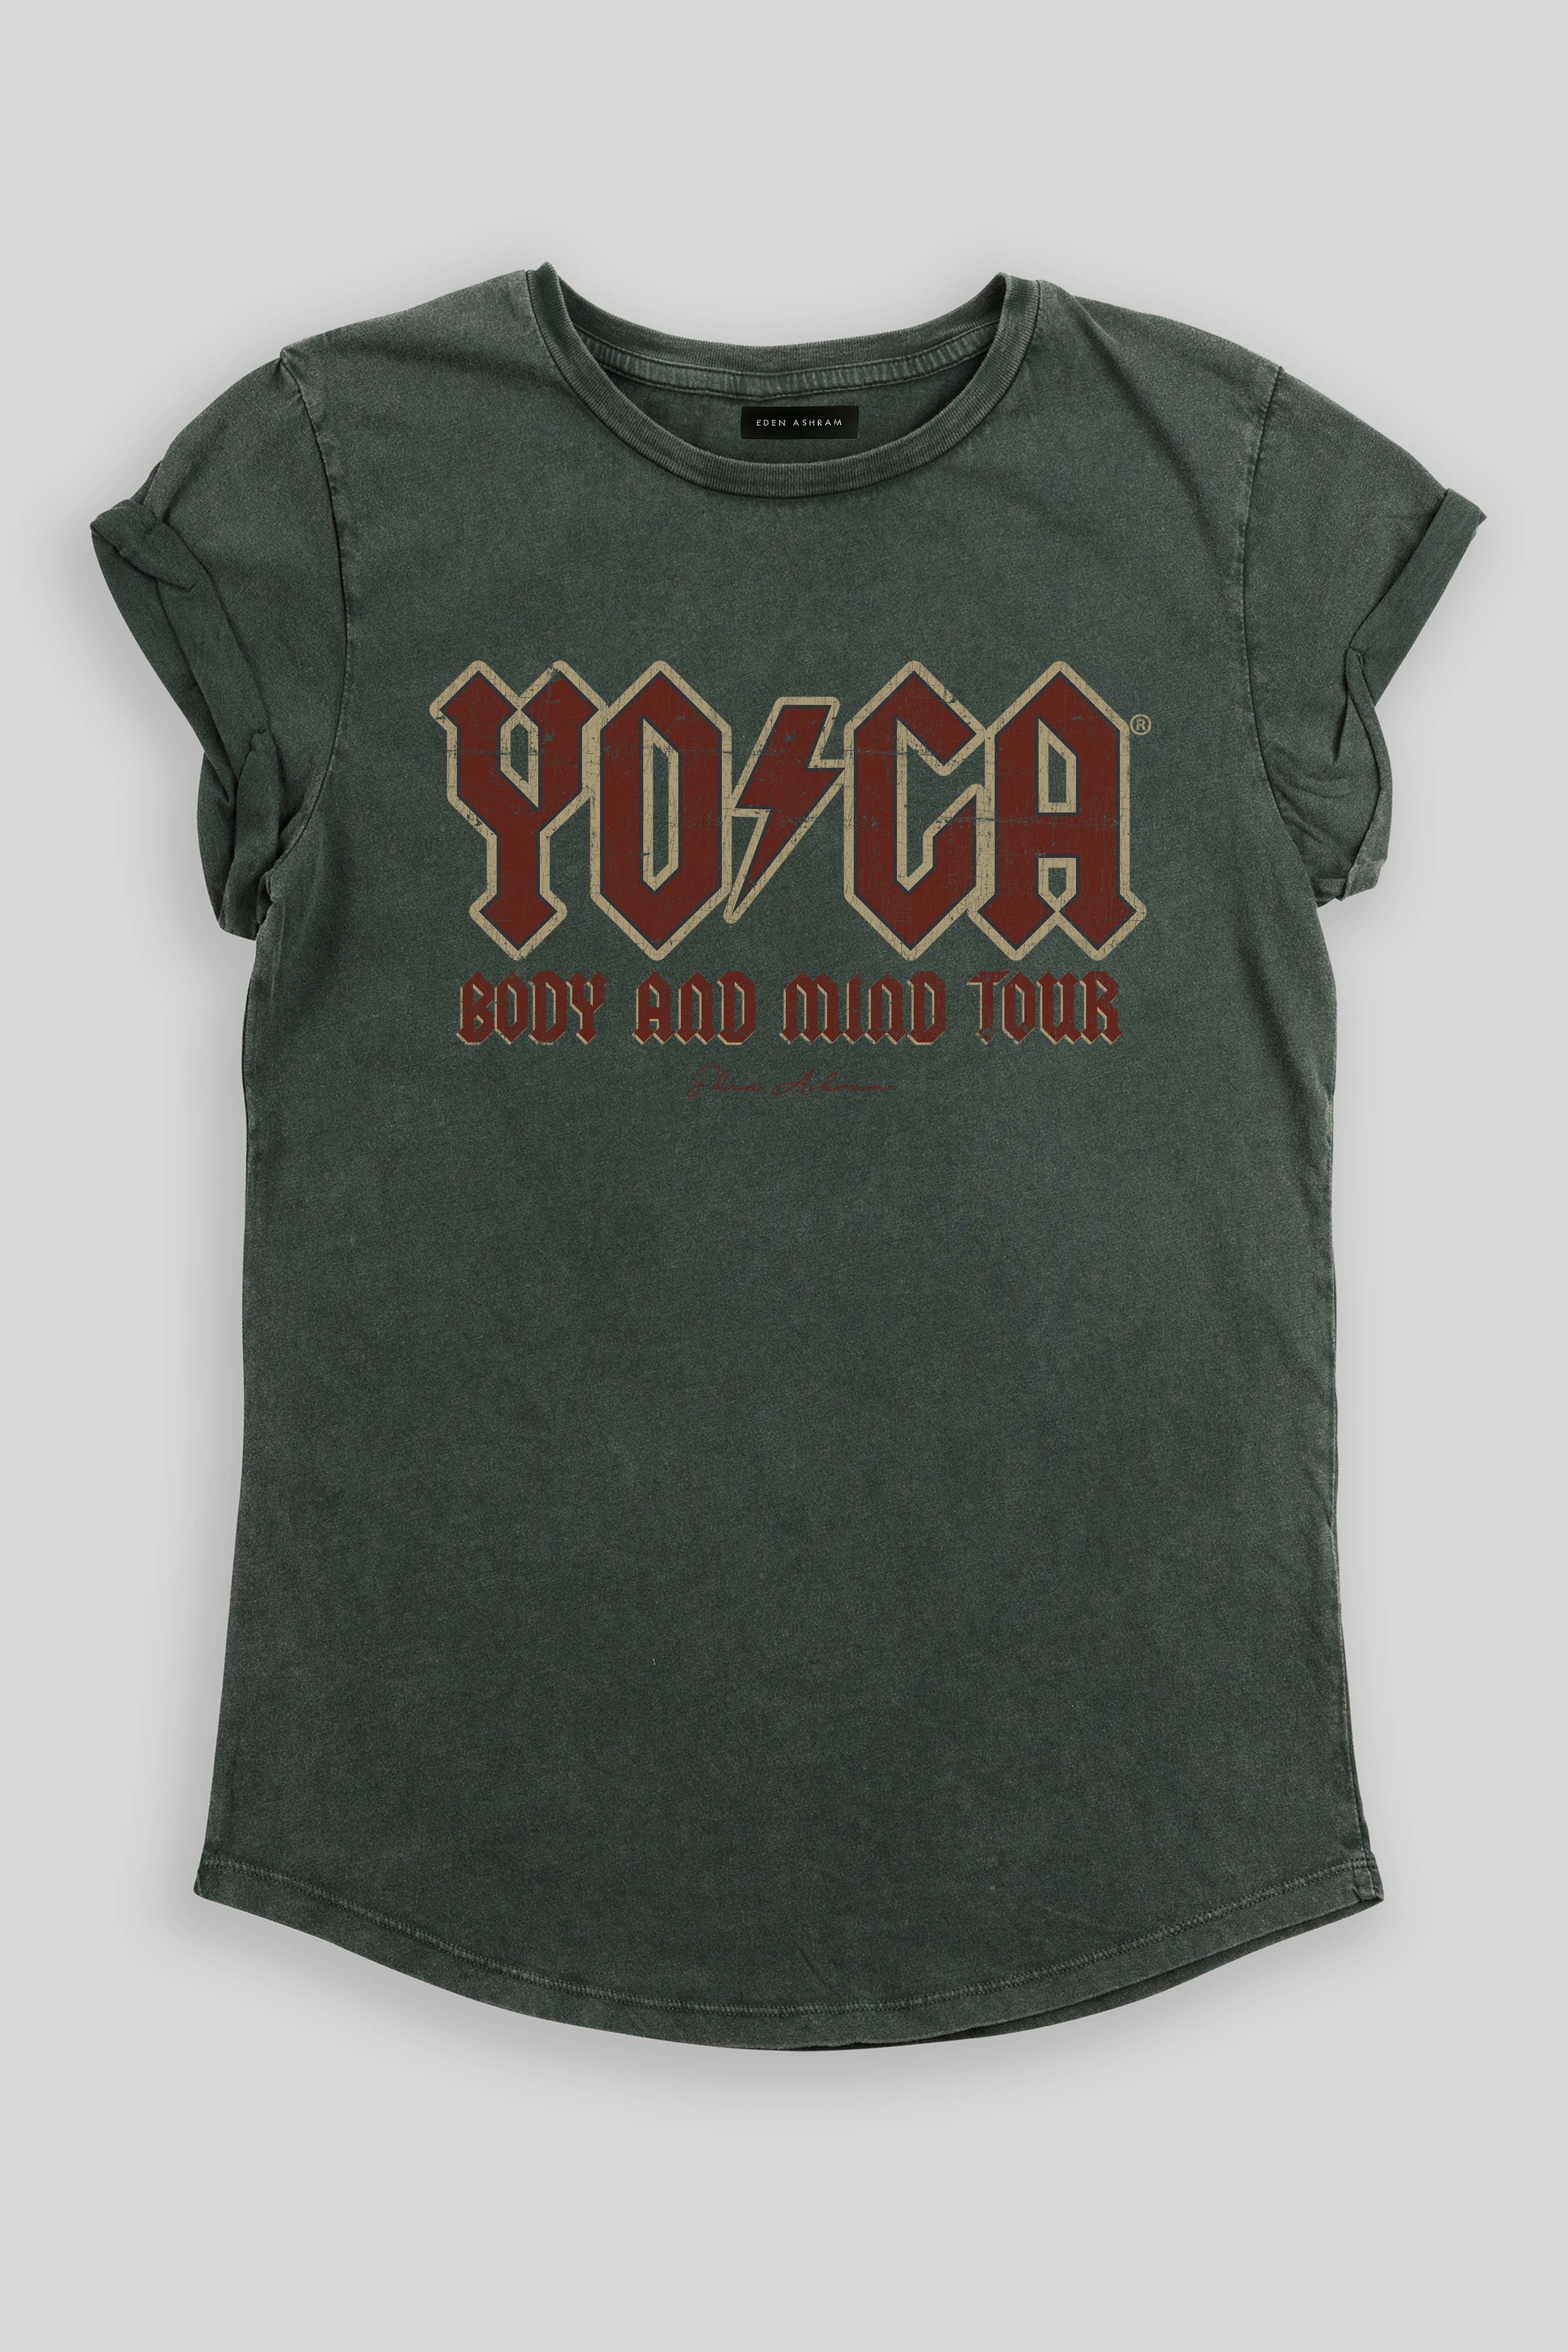 EDEN ASHRAM The Original YOGA Tour Premium Rolled Sleeve T-Shirt Stonewash Green